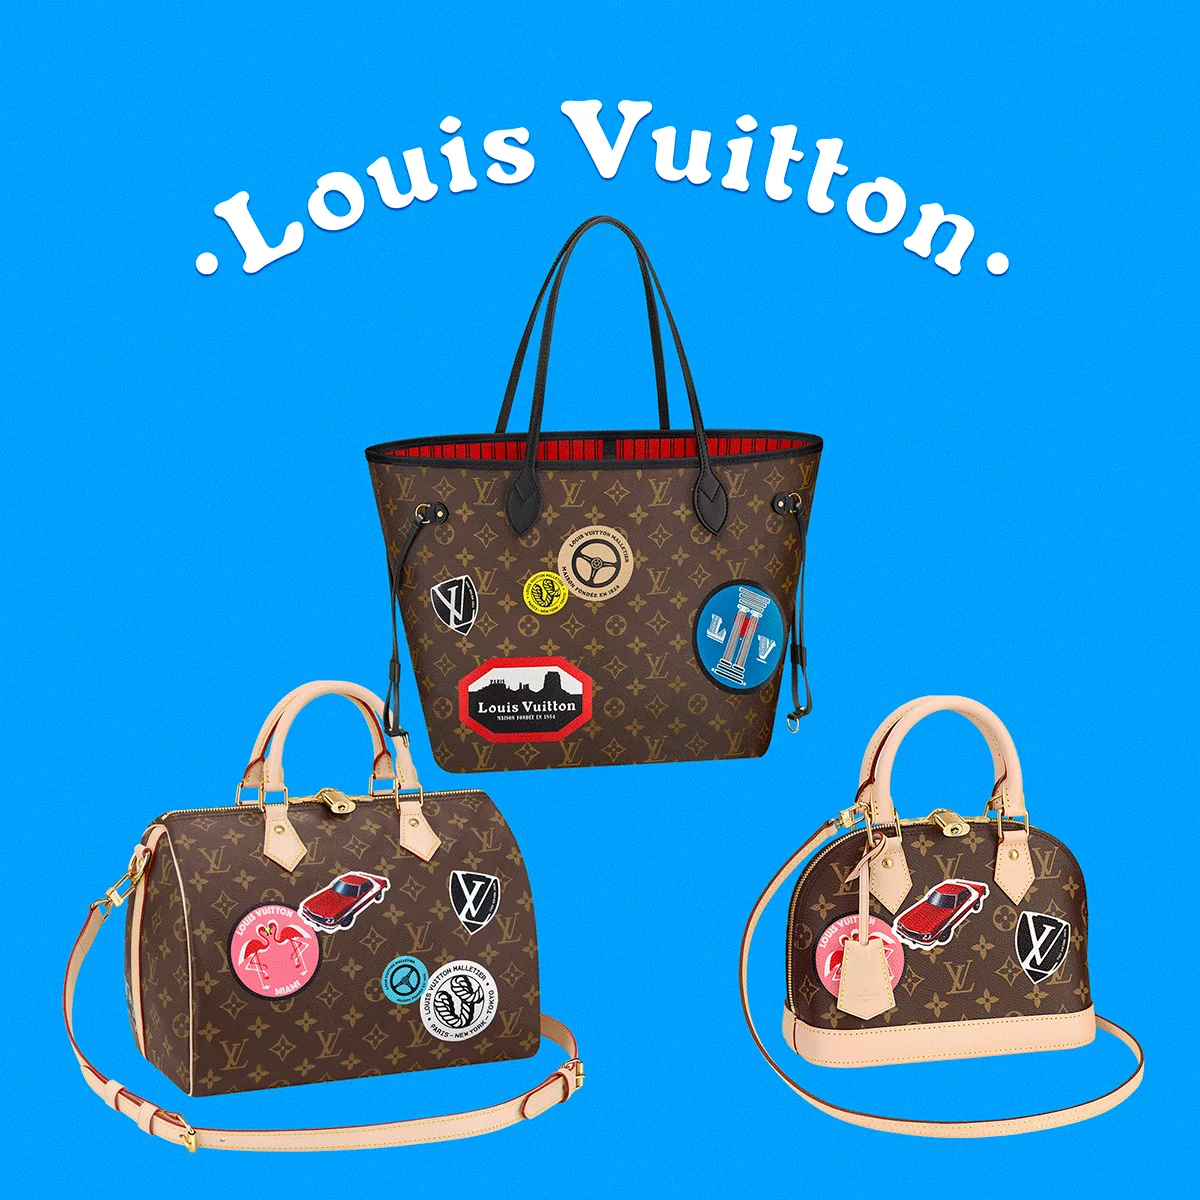 Louis Vuitton rusza w świat